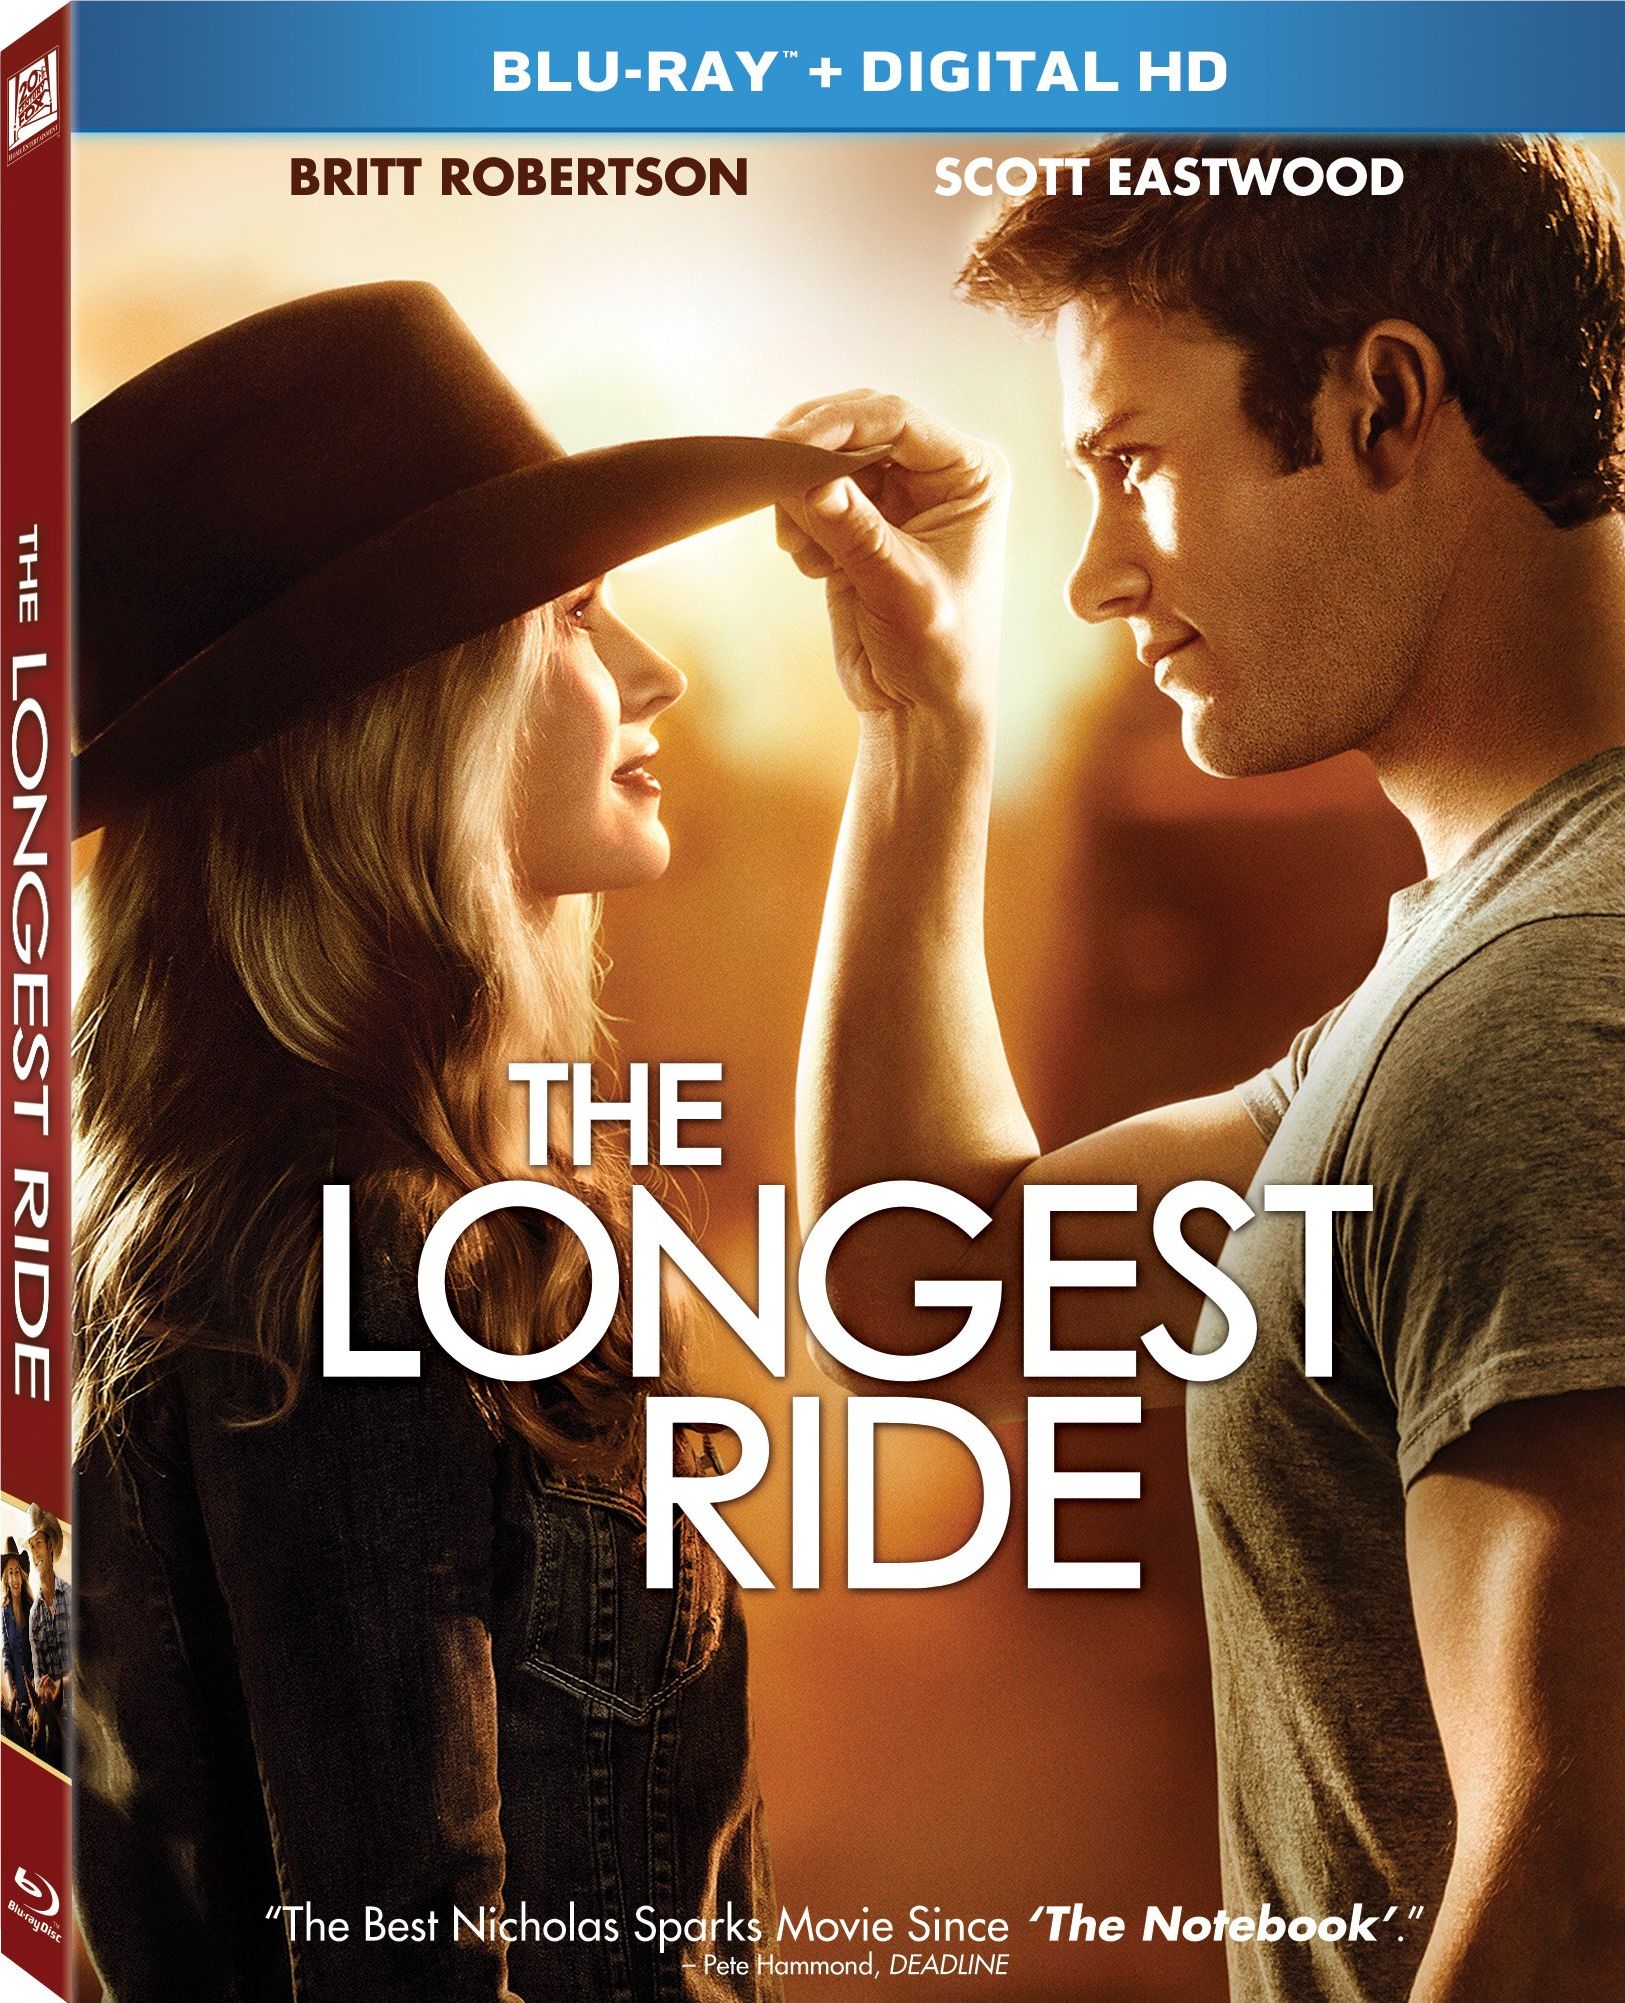 The Longest Ride #7